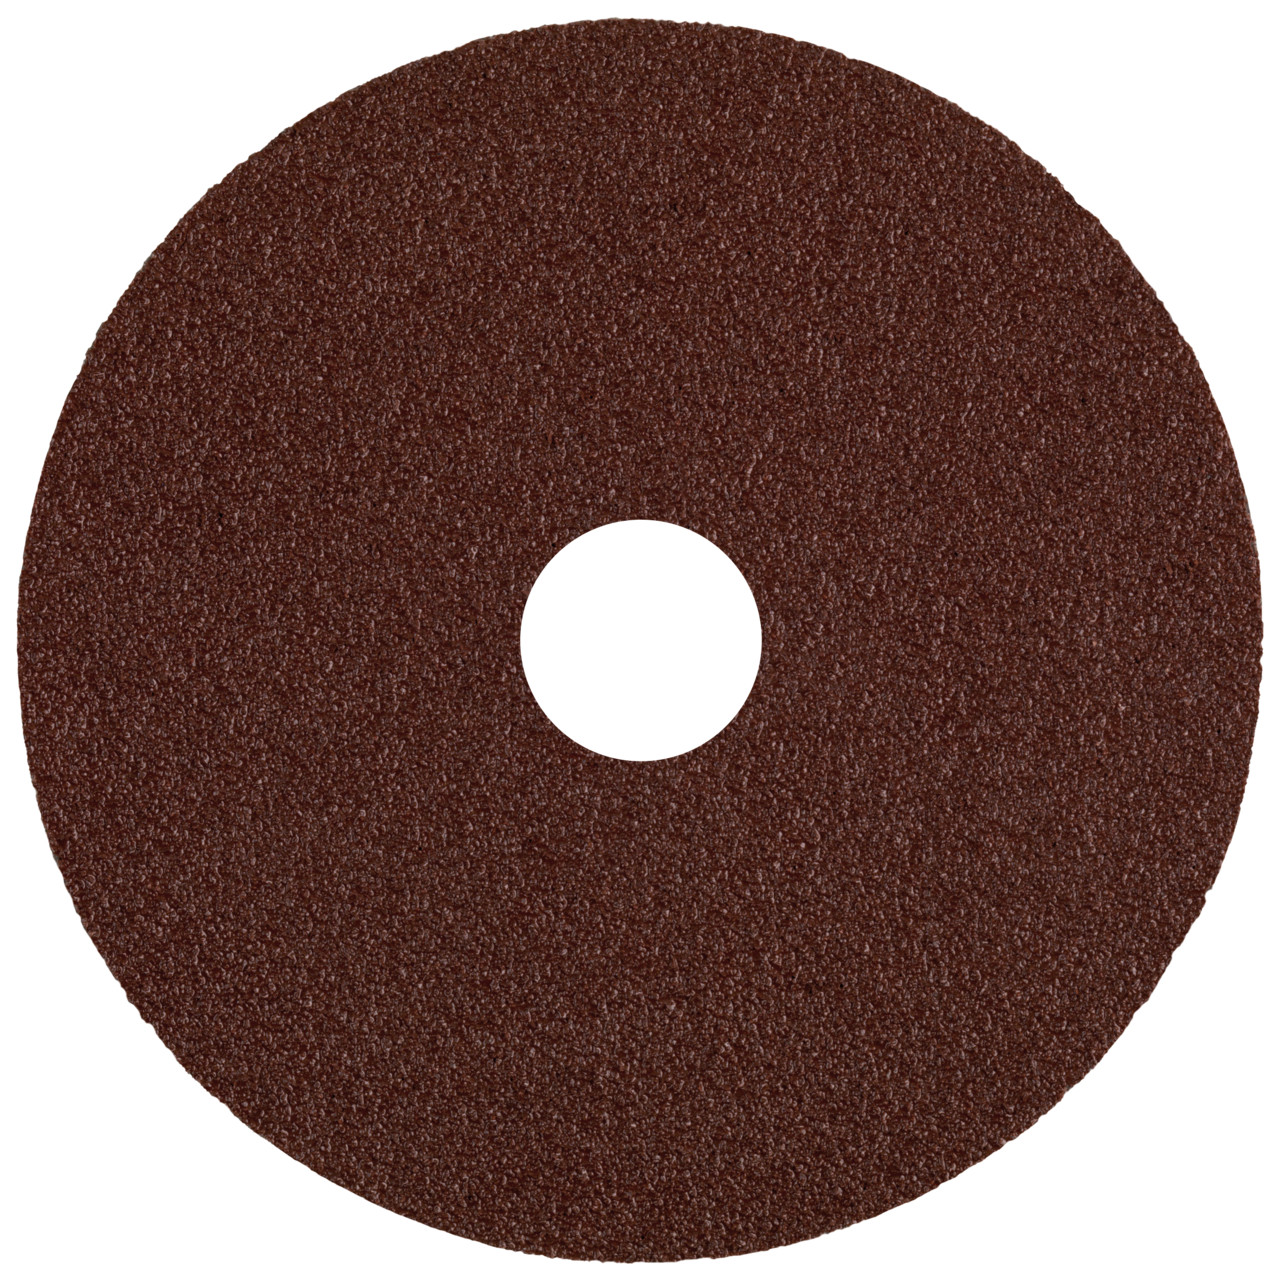 Tyrolit A-B02 V Vulcanised fibre disc DxH 115x22 For steel, non-ferrous metals and wood, P60, shape: DISC, Art. 34286494